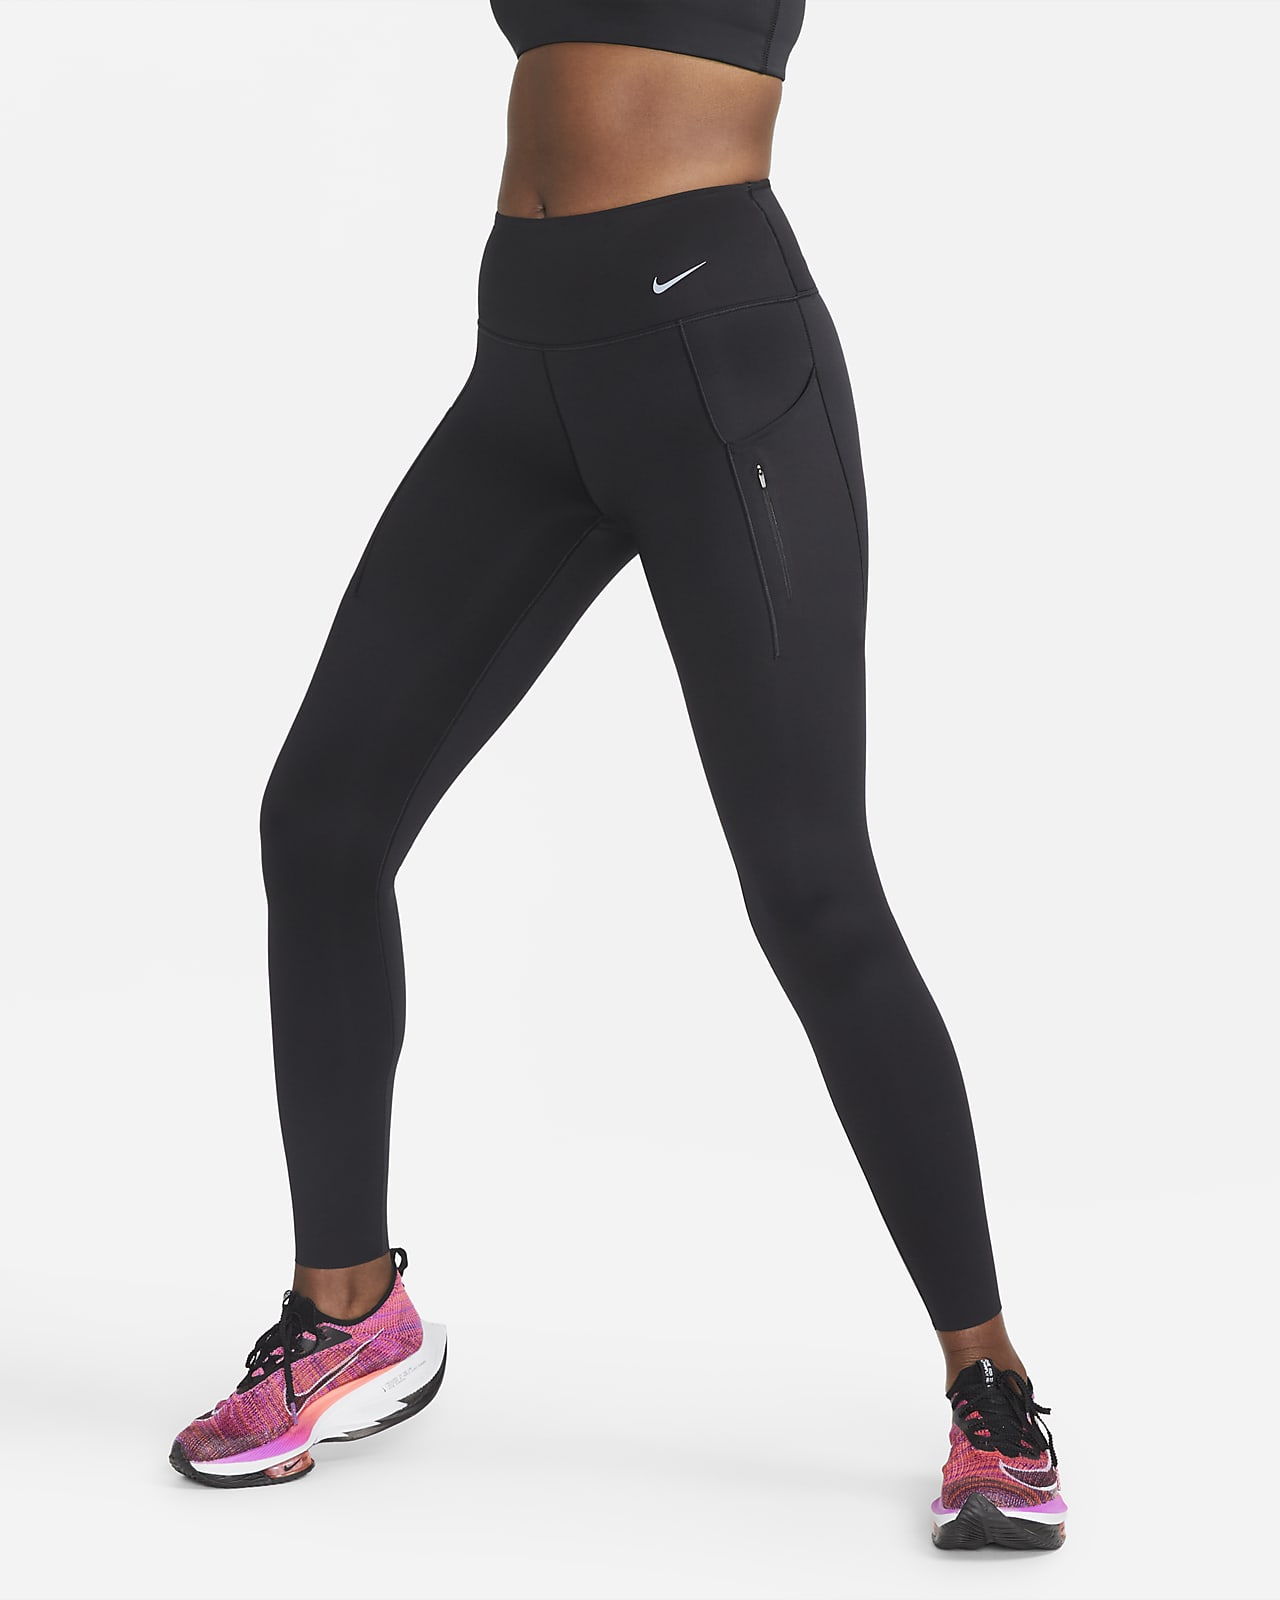 Nike Women's Dri-Fit One Mid Rise Camo Leggings (Medium Olive/White, Small)  